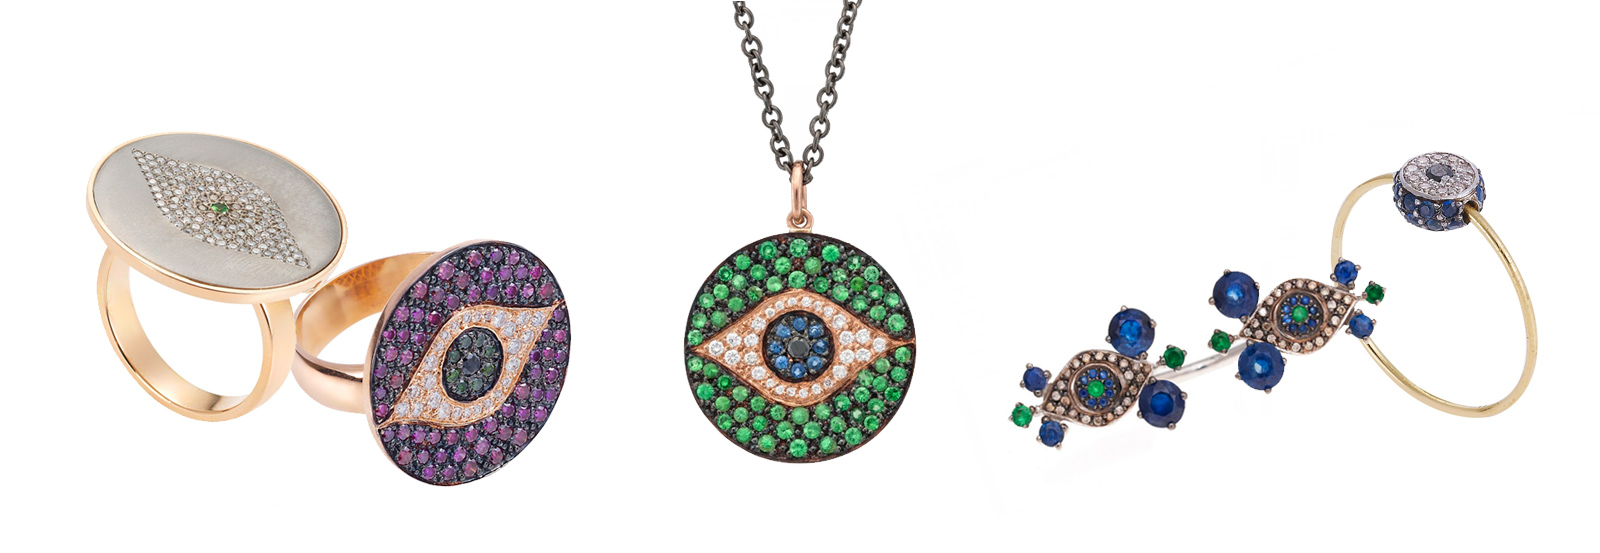 Ileana Makri Evil Eye collection jewellery